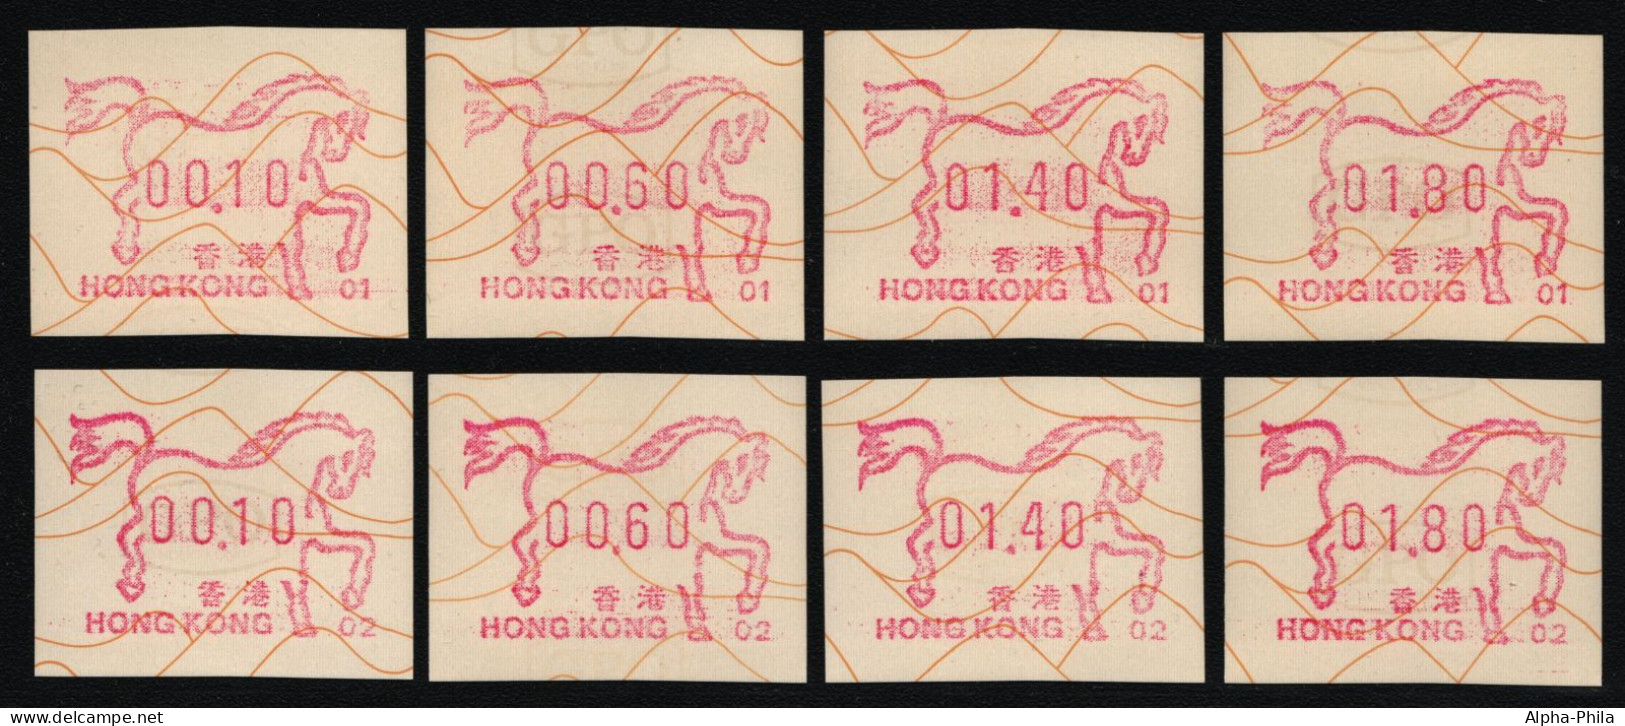 Hongkong 1990 - Mi-Nr. ATM 5 ** - MNH - Automat 01 & 02 - Je 4 Wertstufen - Distribuidores